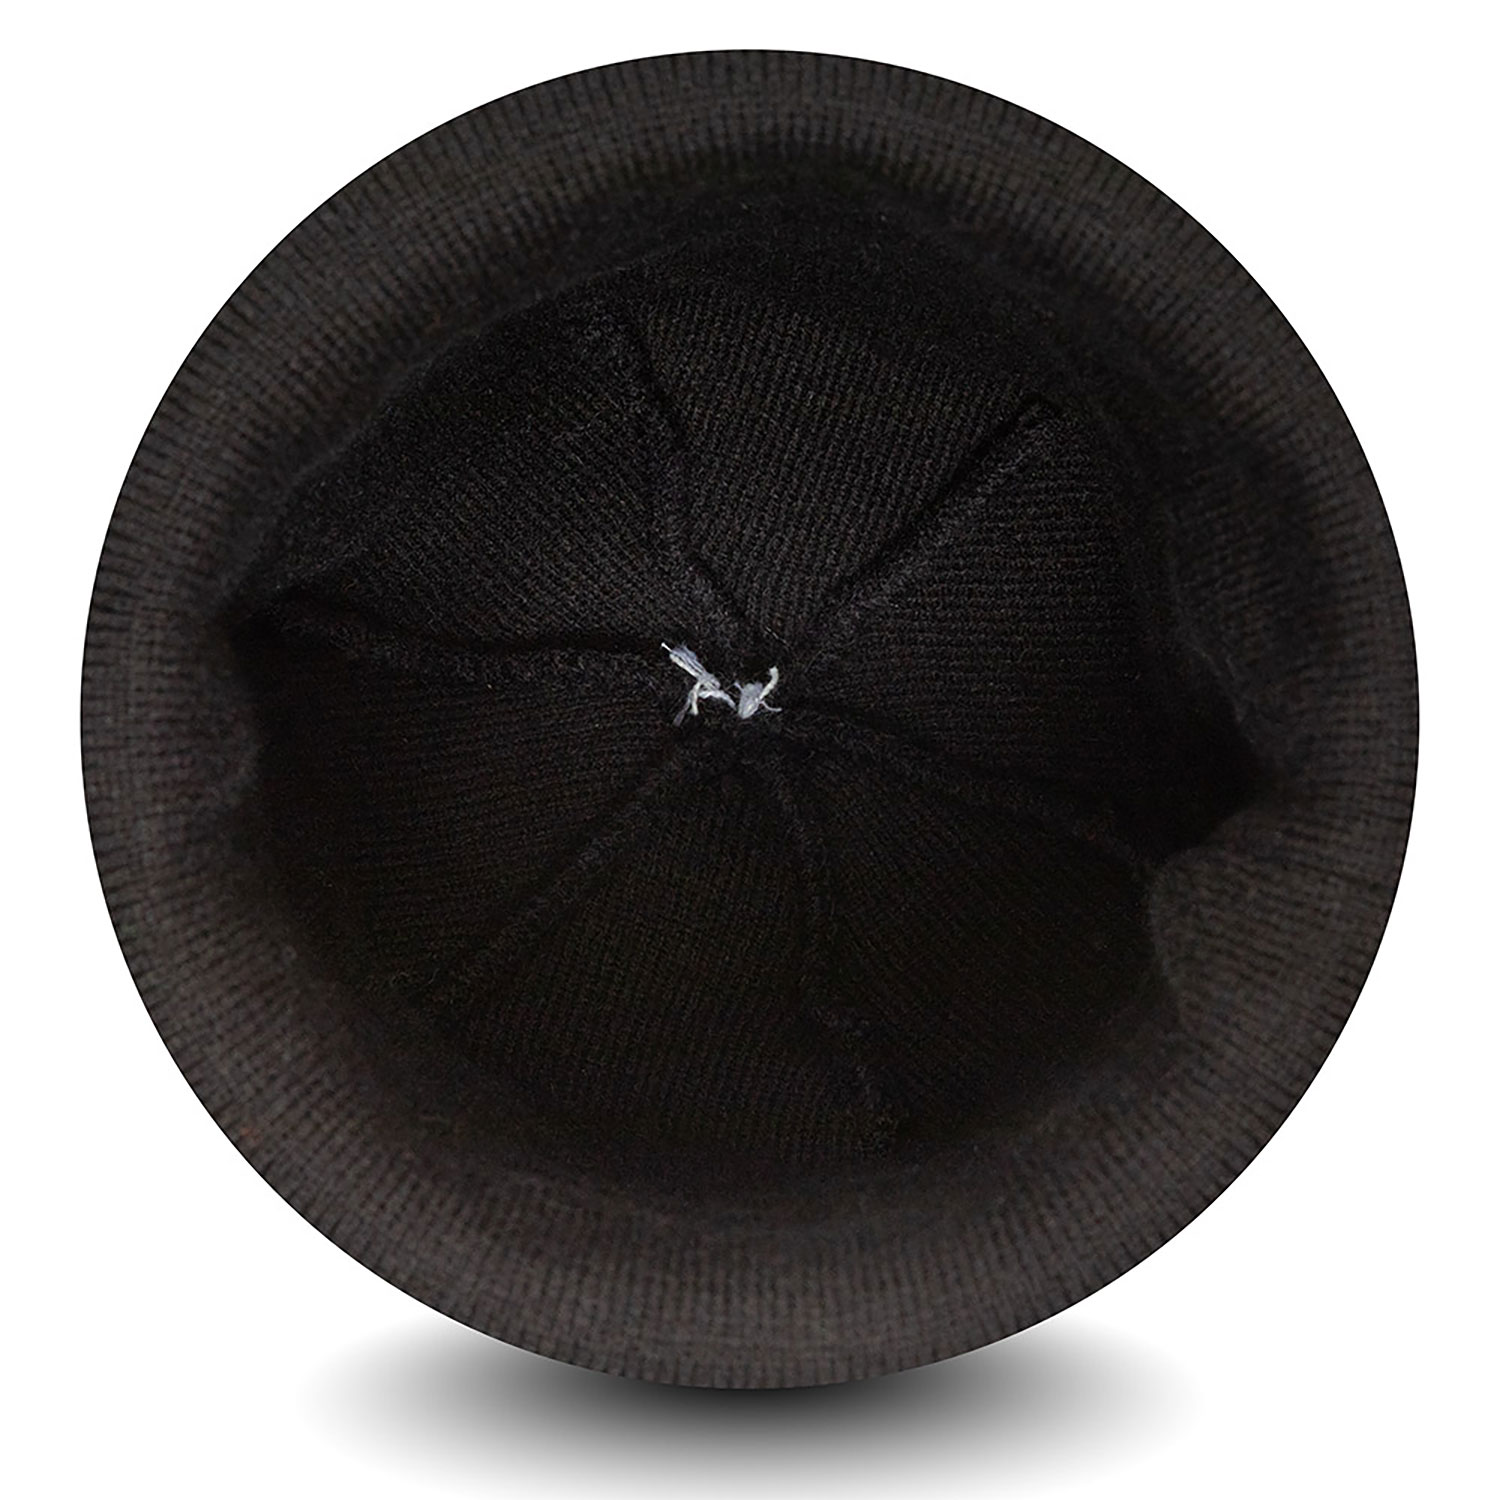 AC Milan Collegiate Black Bobble Knit Beanie Hat